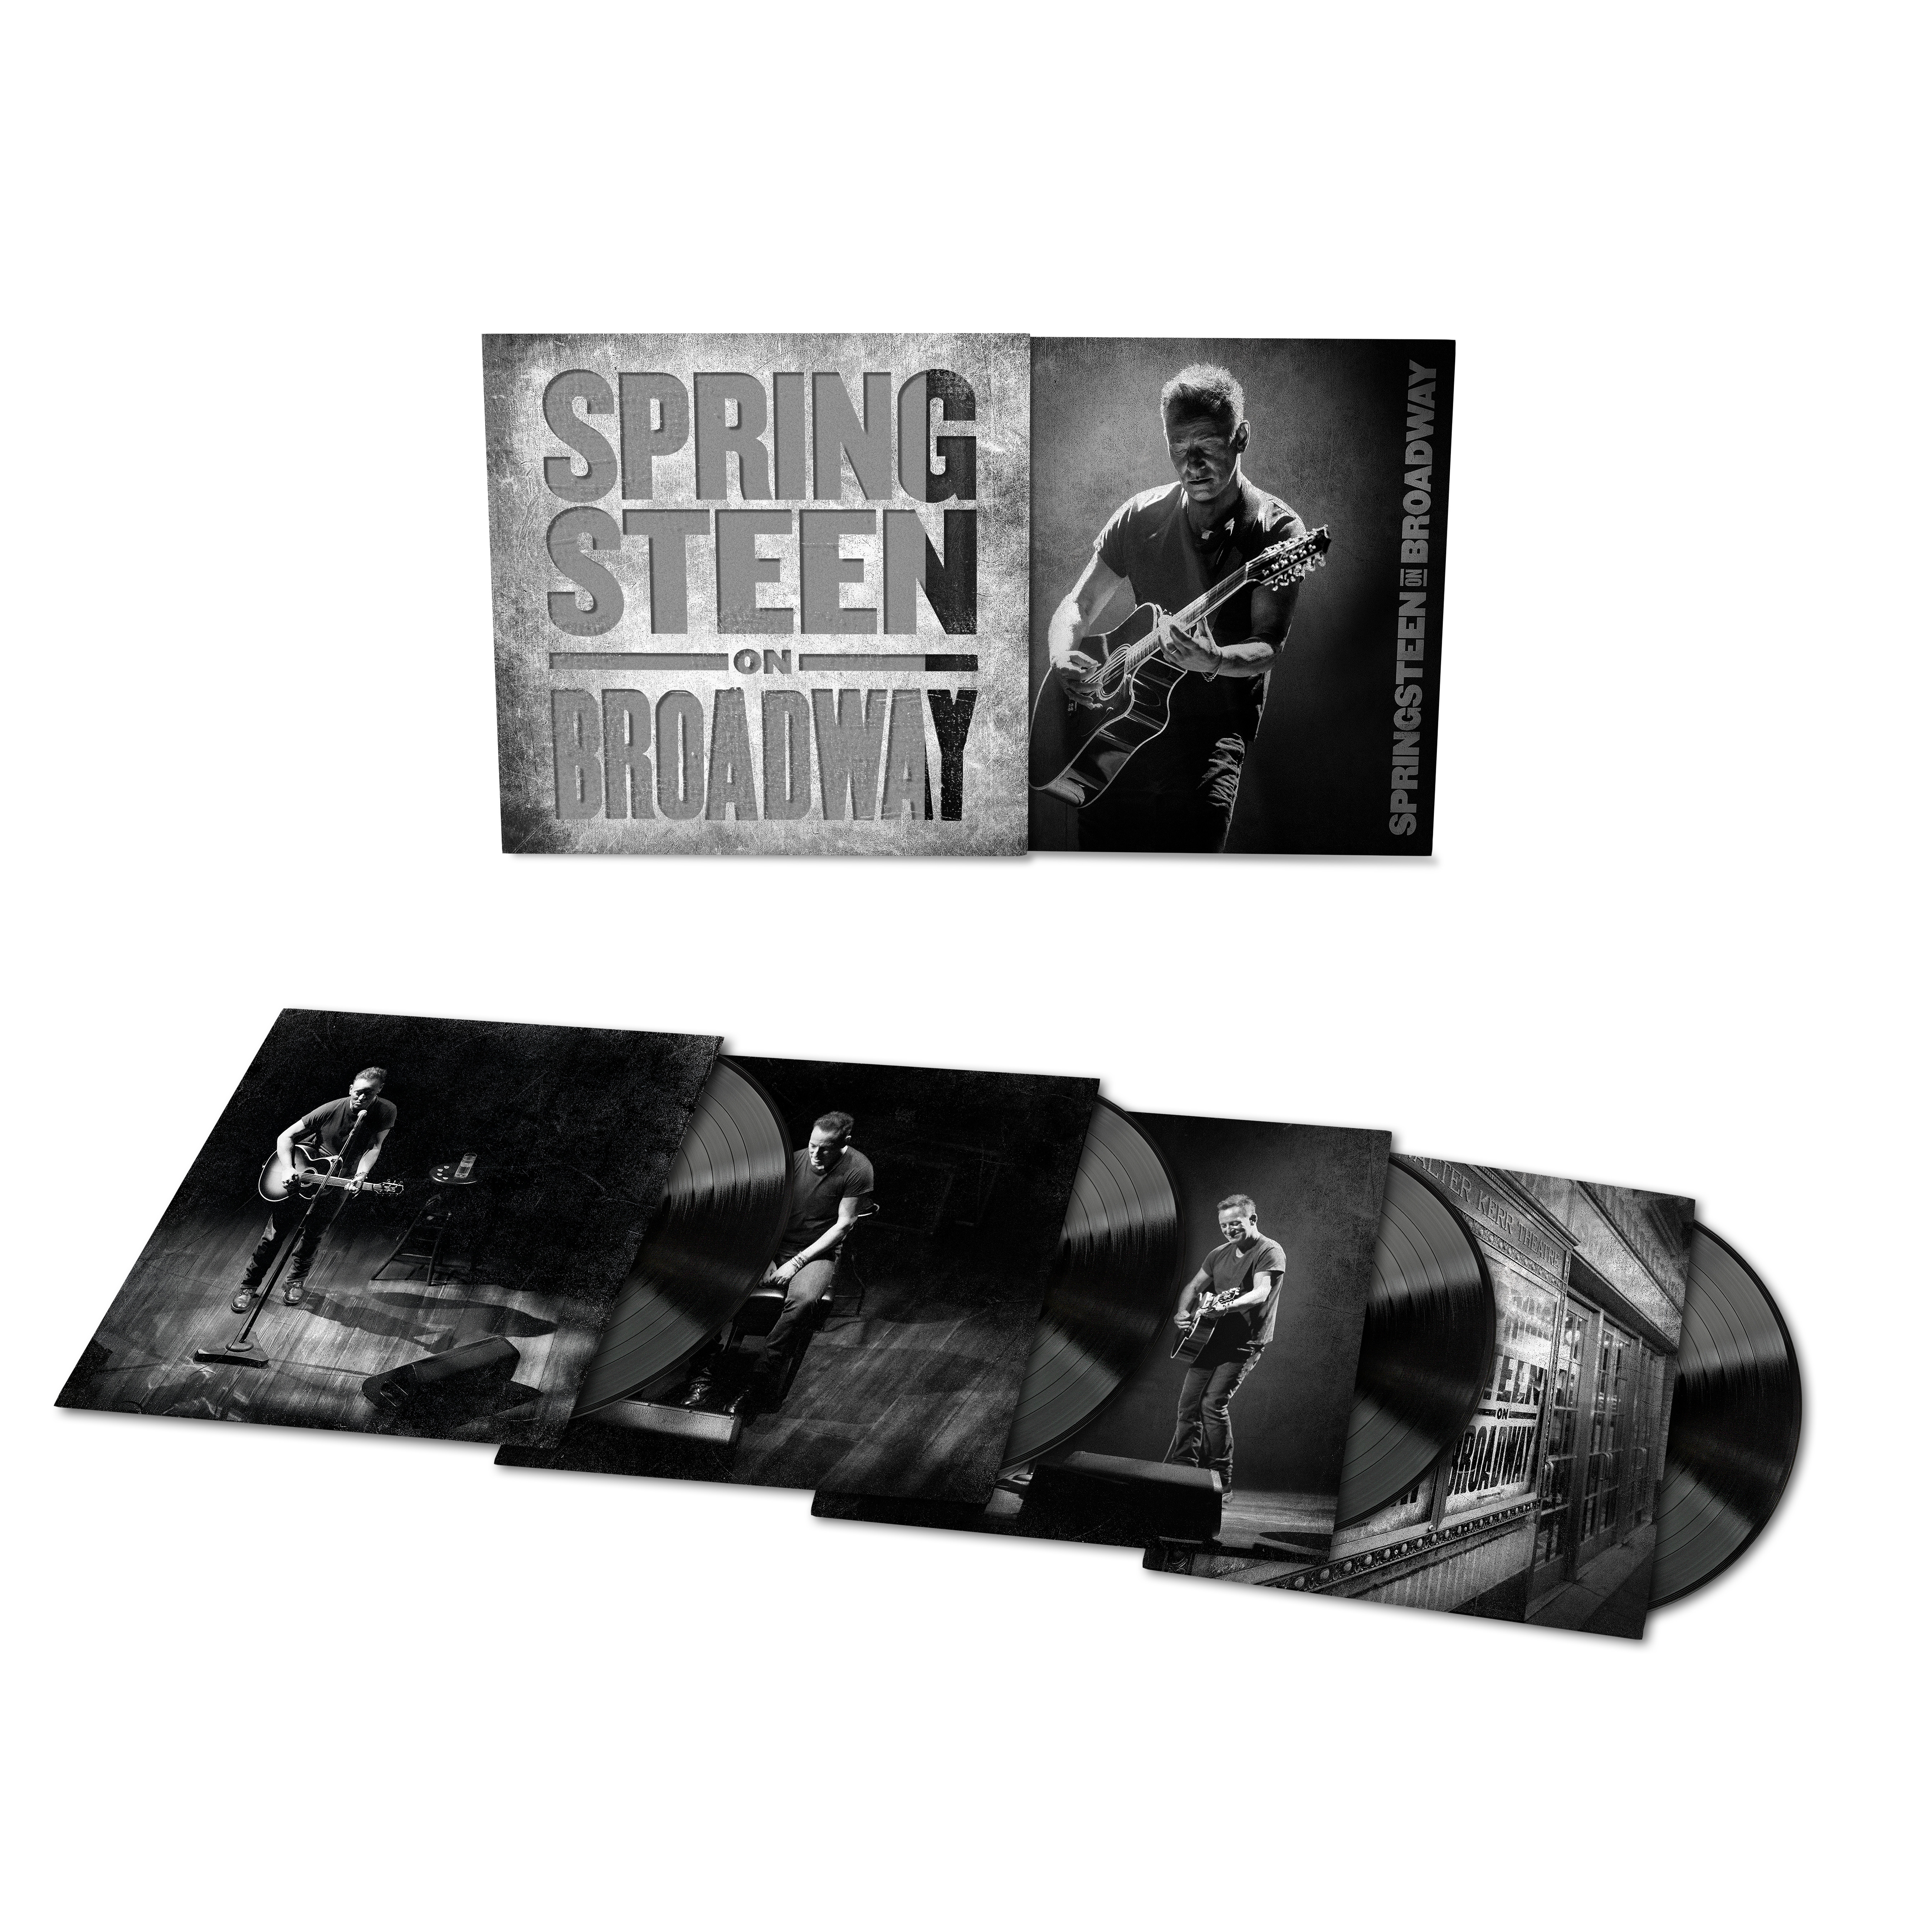 Broadway Bruce (Vinyl) - - Springsteen on Springsteen